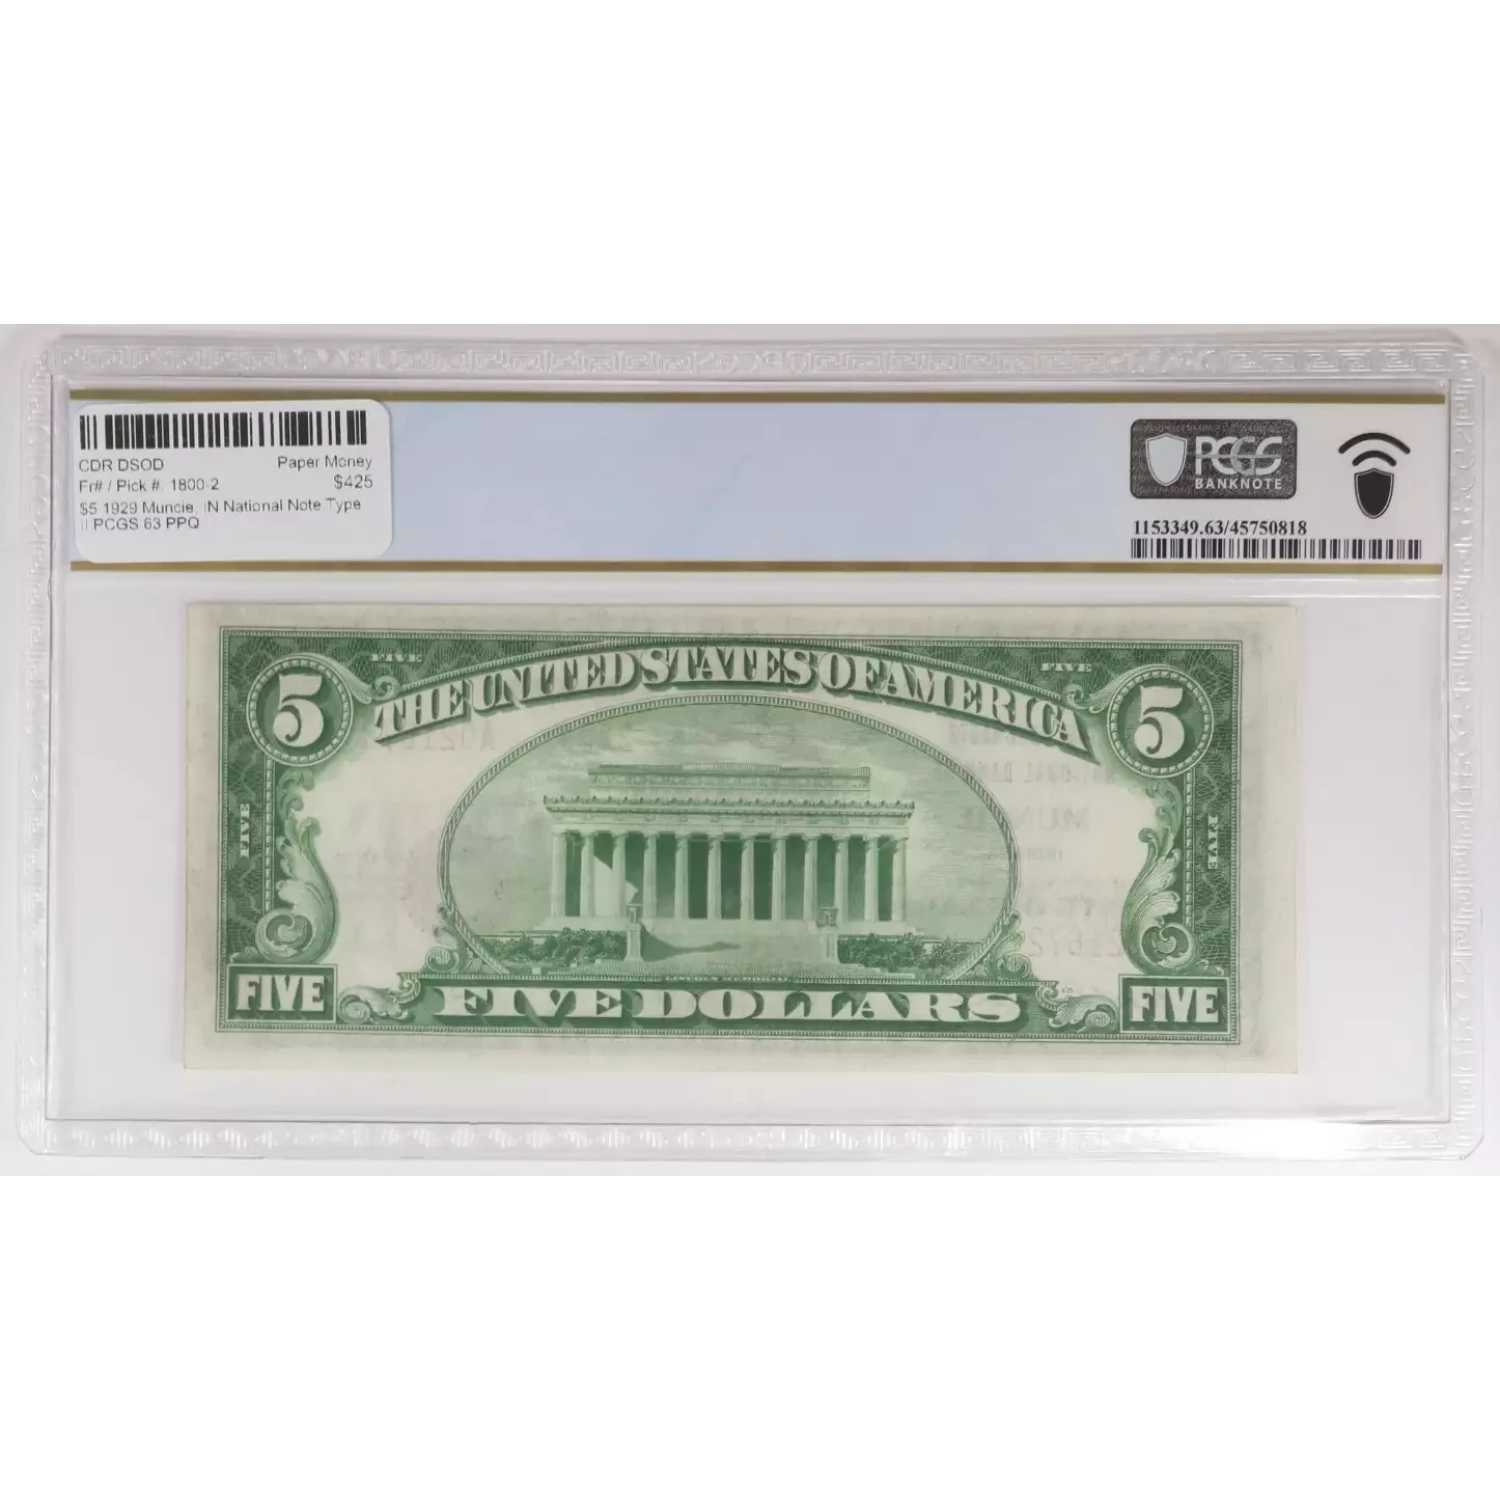 $5 1929 Muncie, IN National Note Type II PCGS 63 PPQ (2)